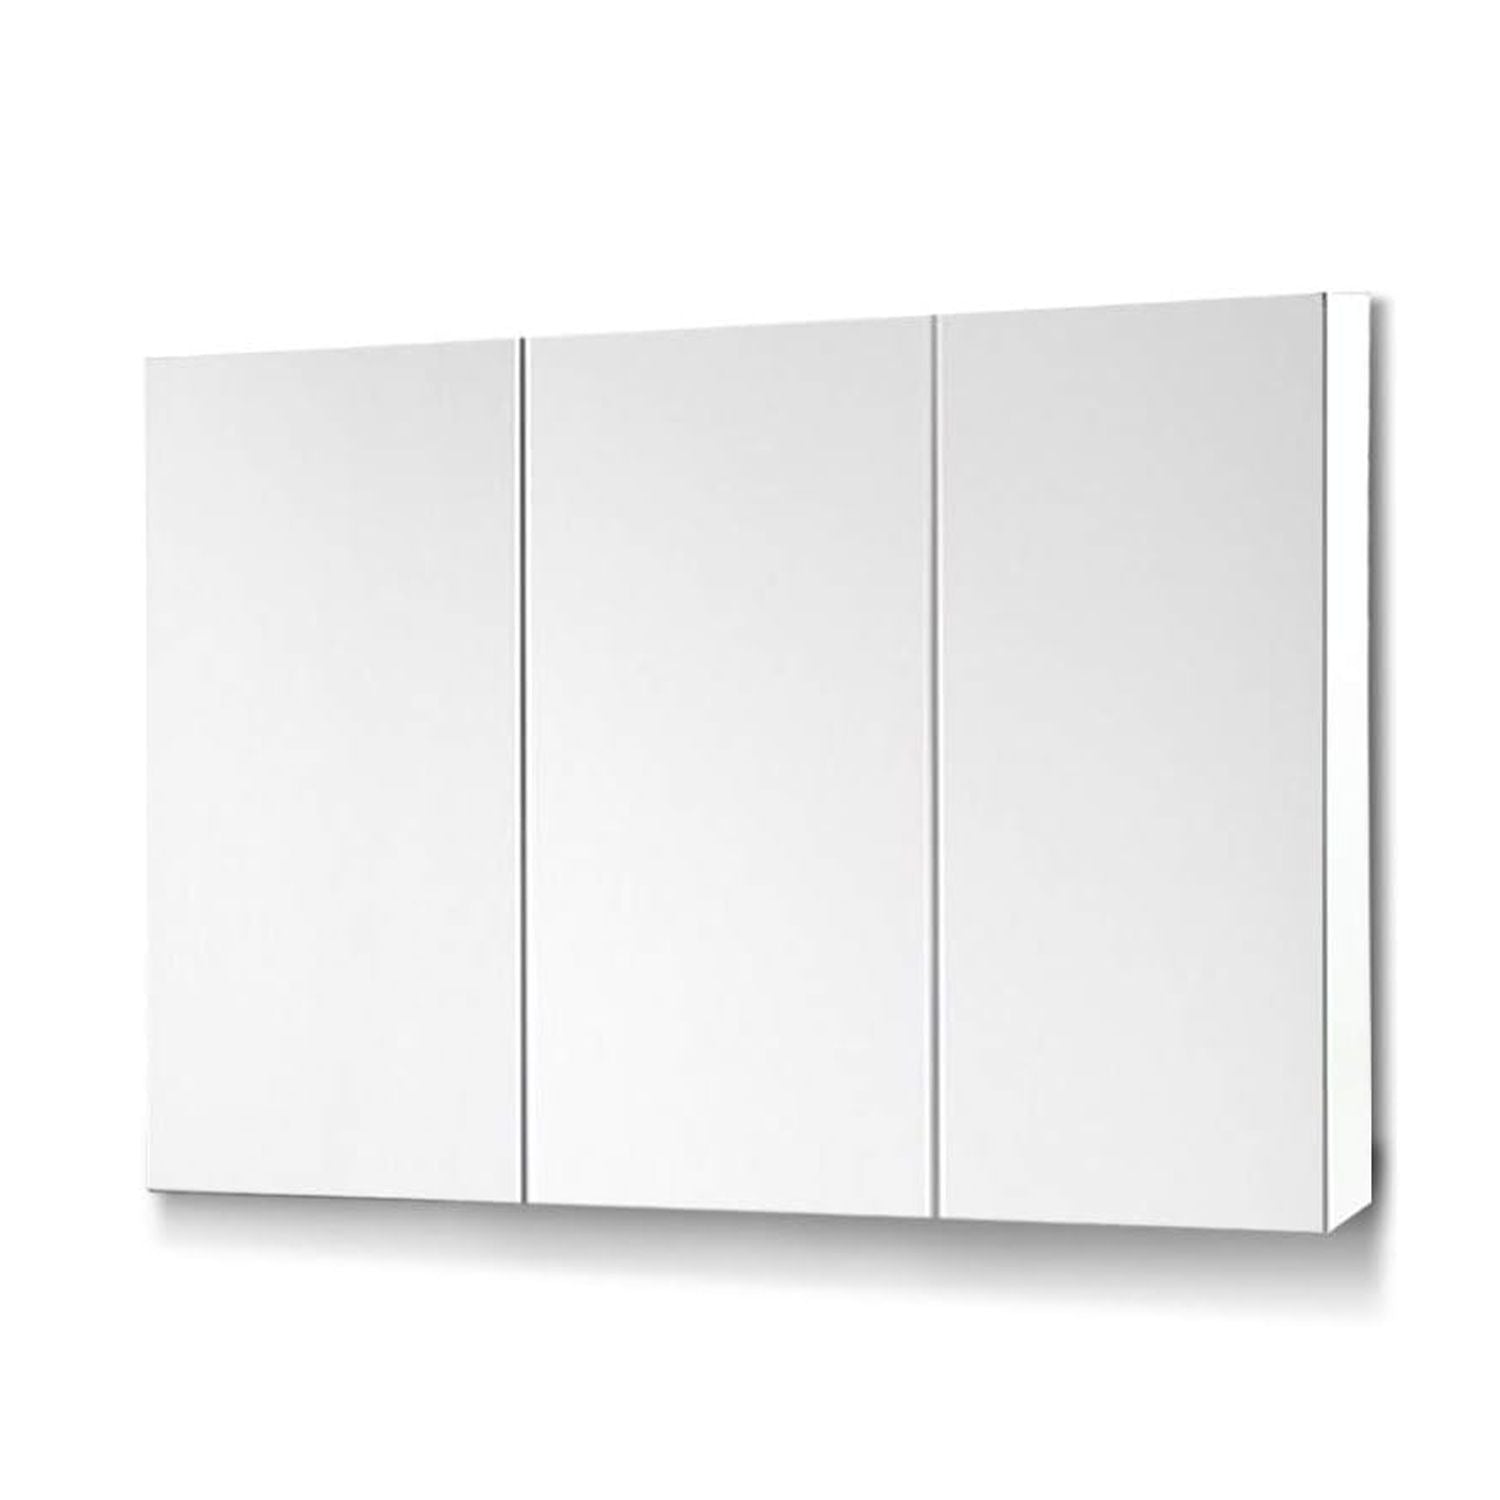 EKKIO Bathroom Vanity Mirror with Triple Door Storage Cabinet (White)